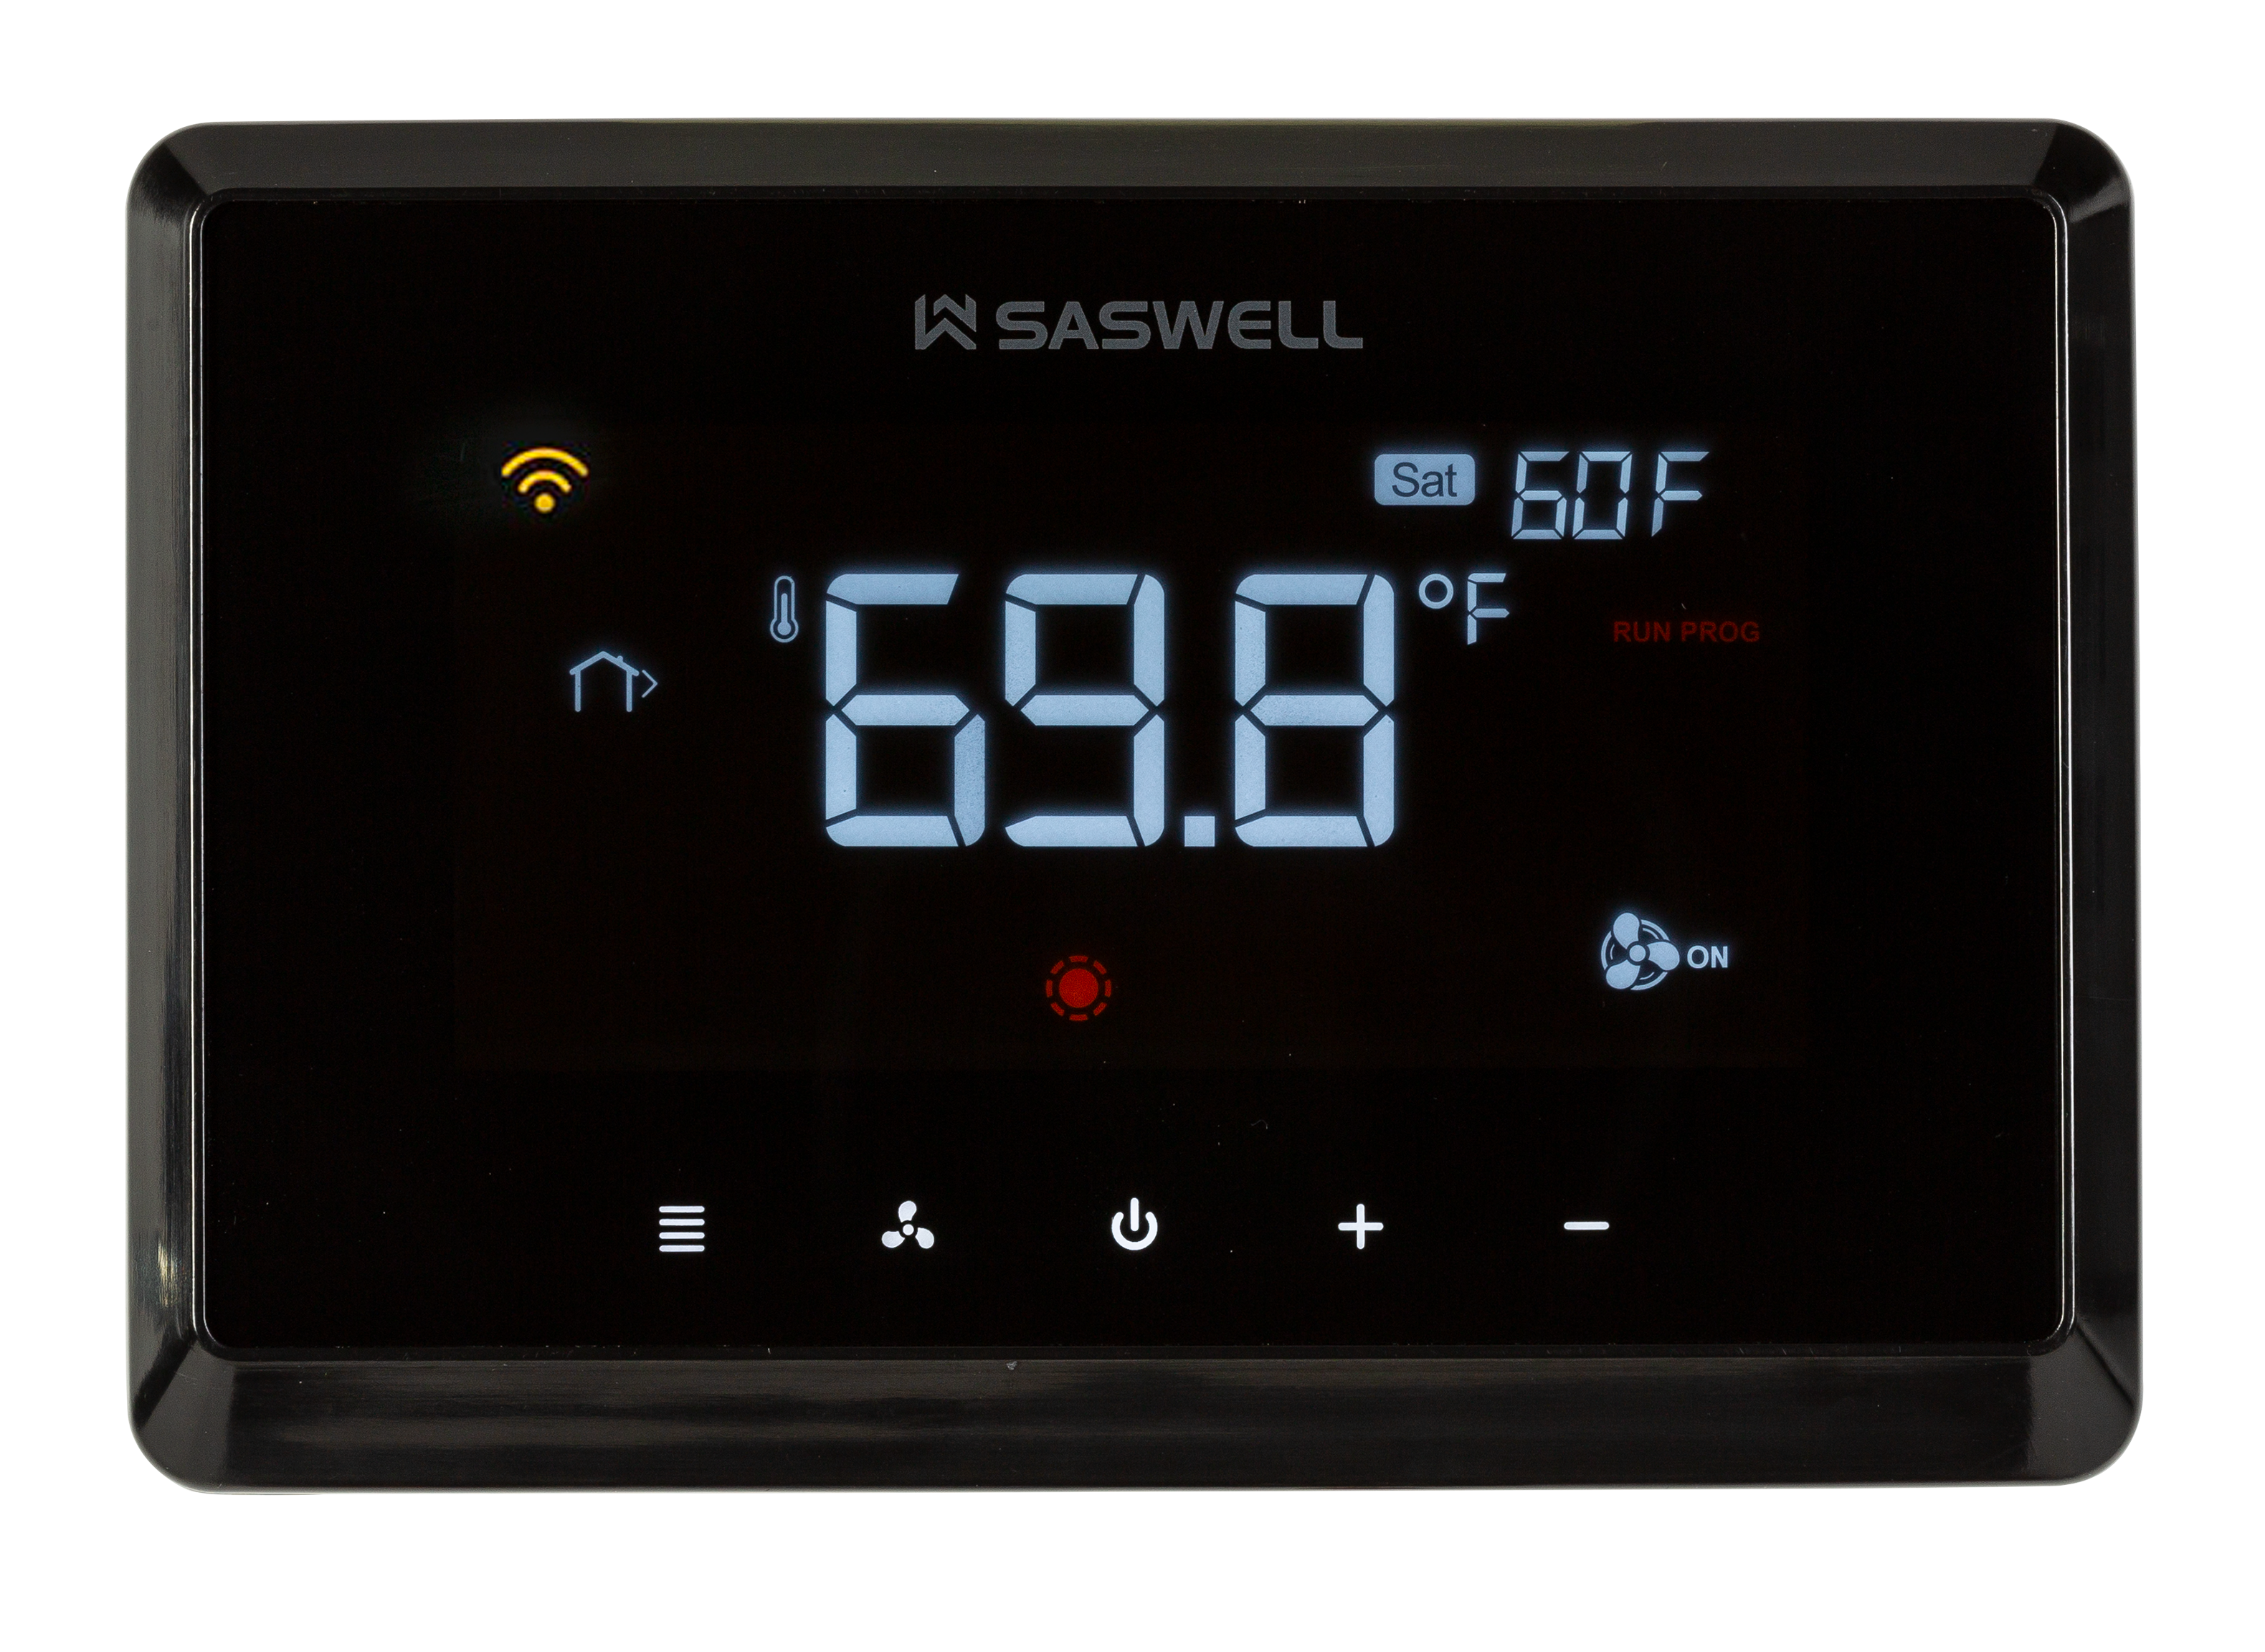 Termostato Wi-Fi Smart para Smart Home, APLICACIÓN Tuya Control remoto,  compatible con Alexa, Google Assistant, Saswell T29utw-7-WiFi (TY) - China  Termostato de la sala de control WiFi, termostato de control por voz